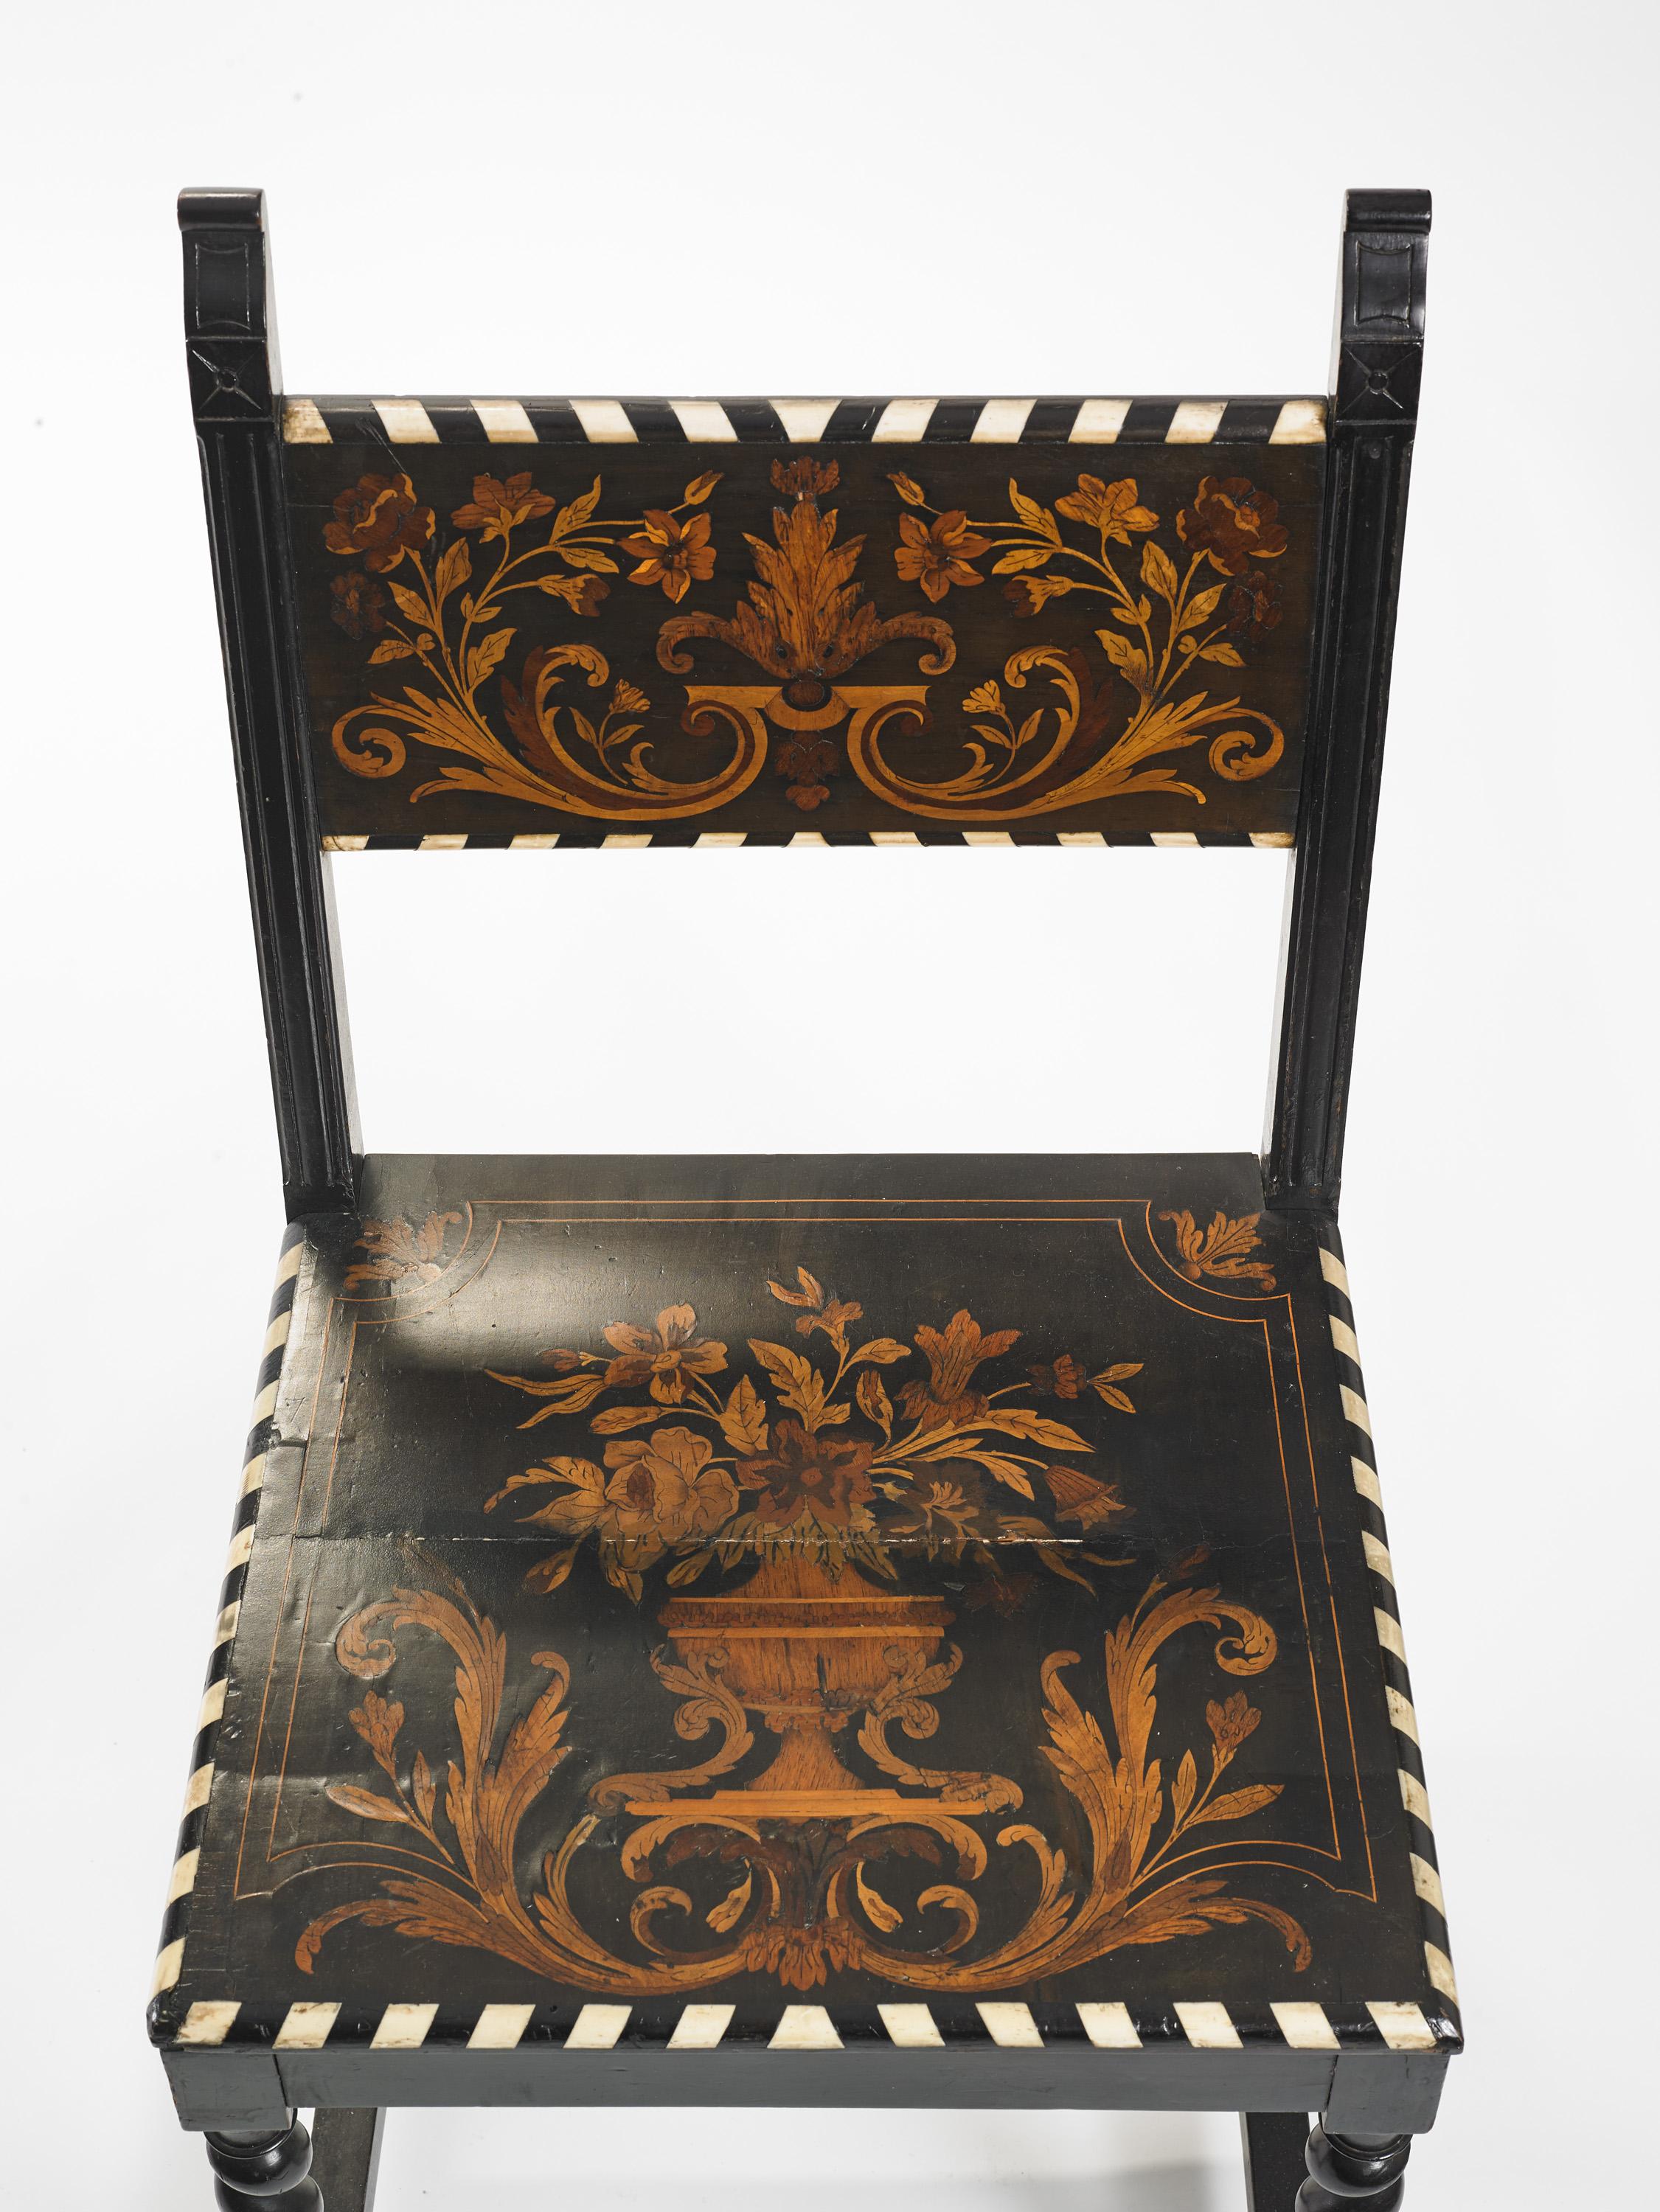 Renaissance Revival Italian Renaissance Style Inlaid Chairs, 'Pair' For Sale